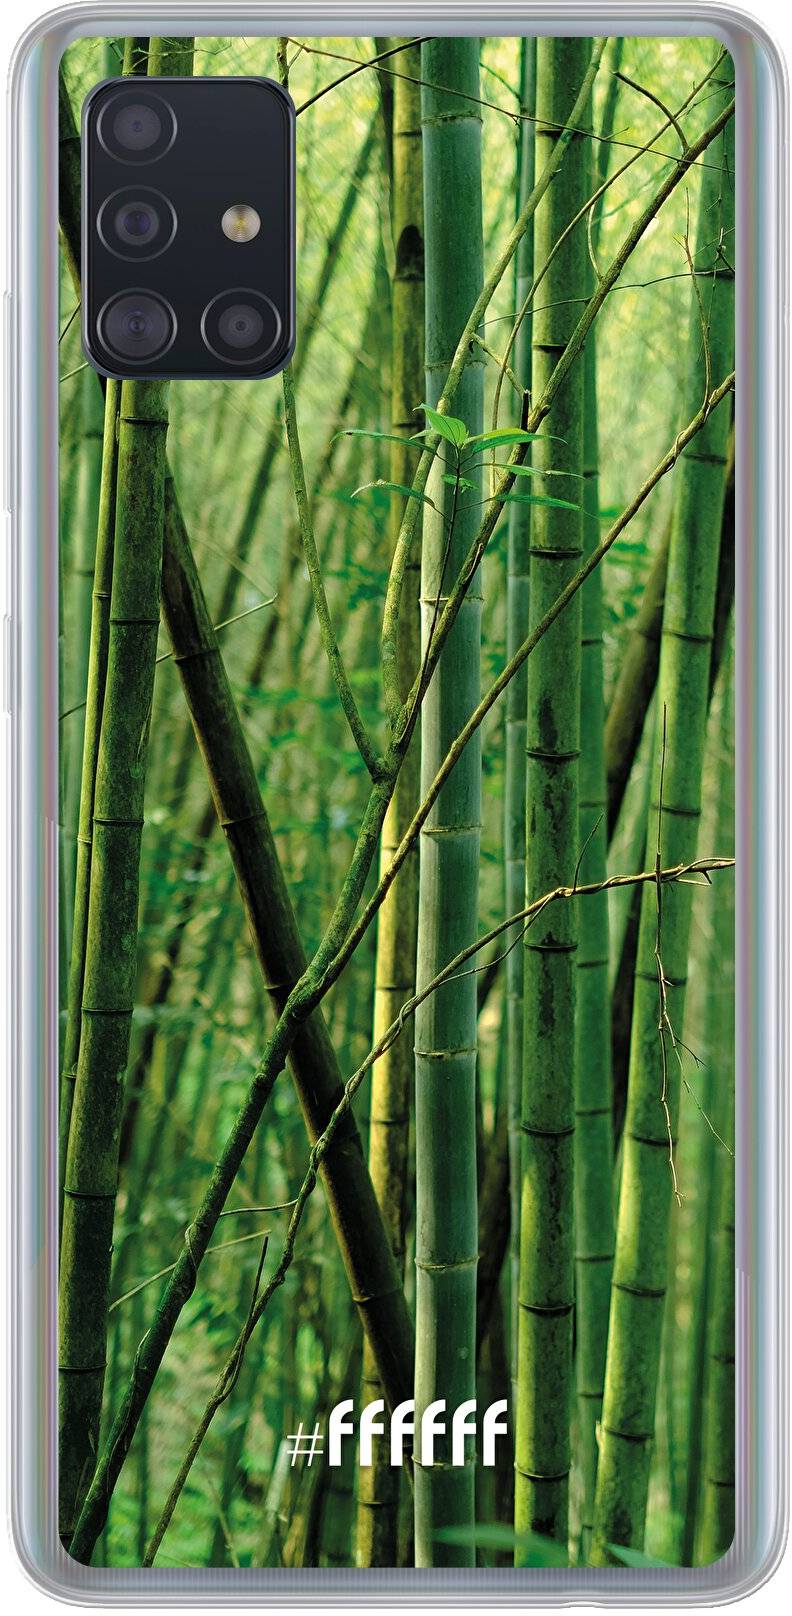 Bamboo Galaxy A51